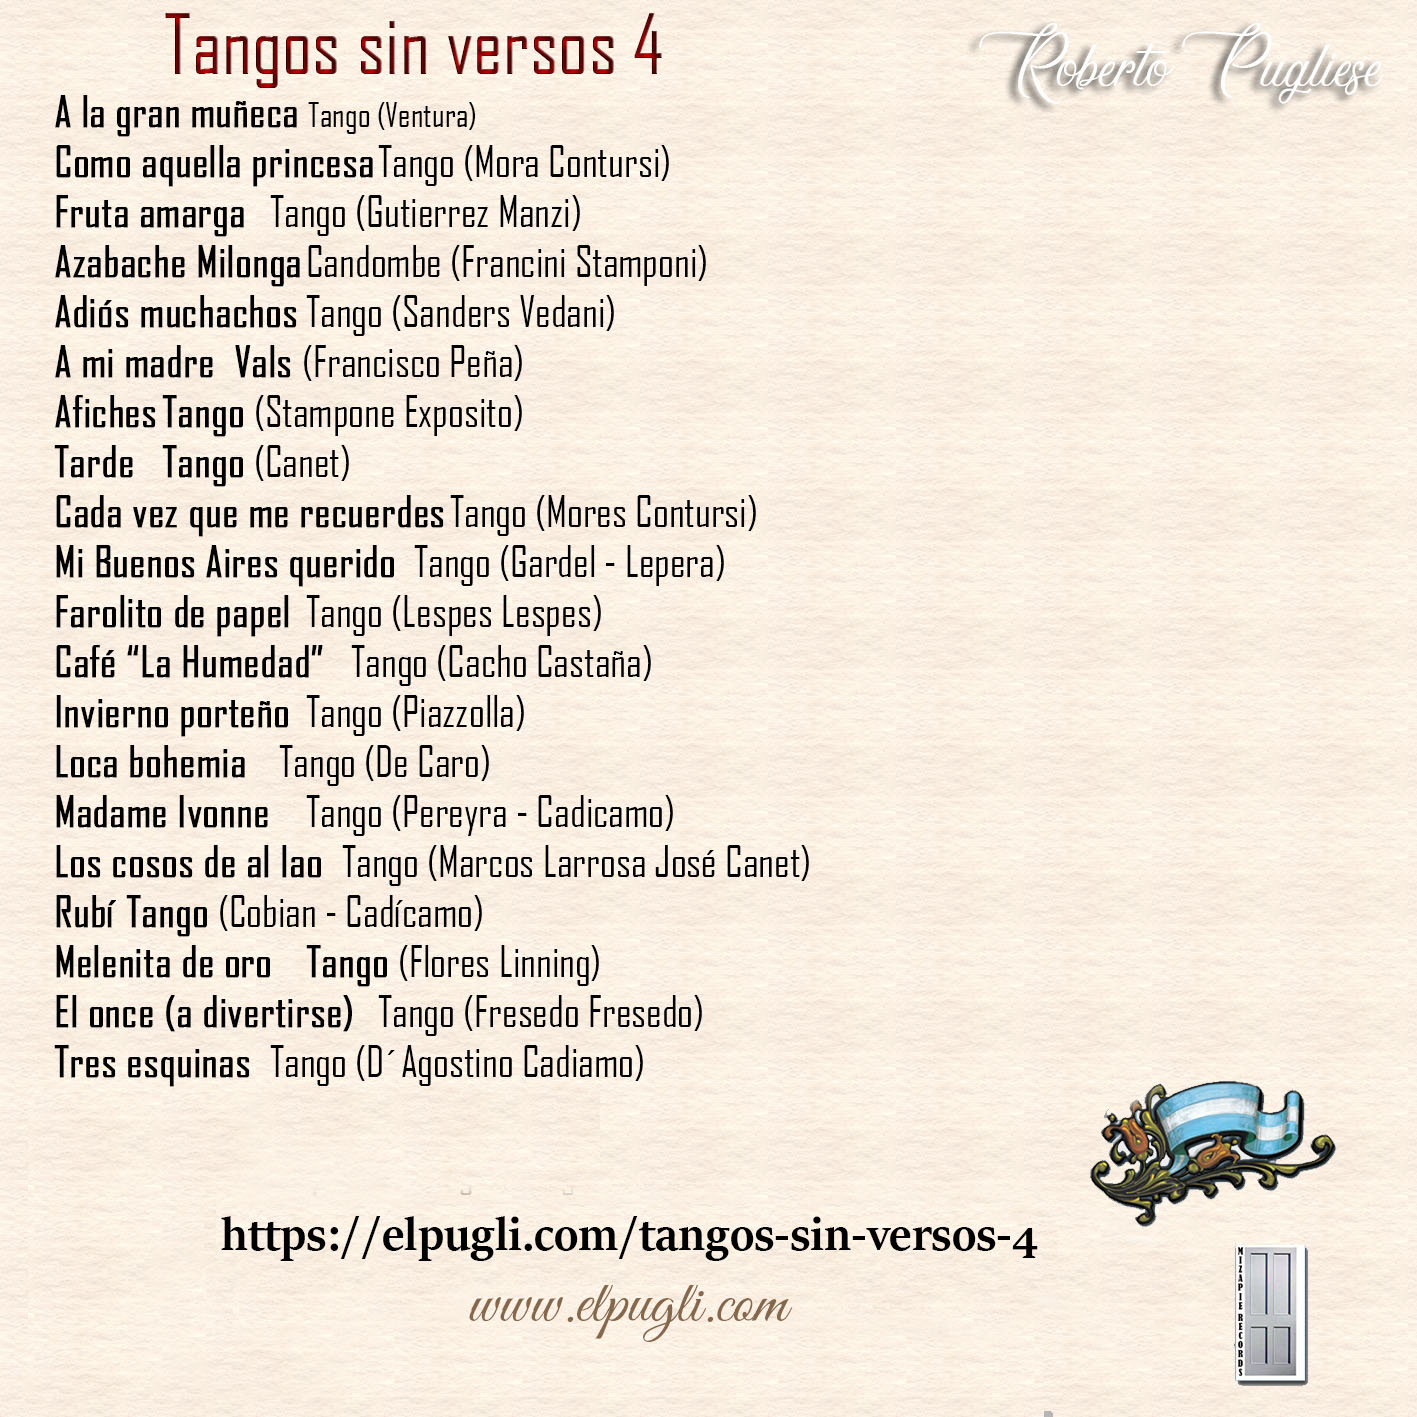 Tangos sin versos 4 💿 20 tracks de tango instrumentales en guitarra